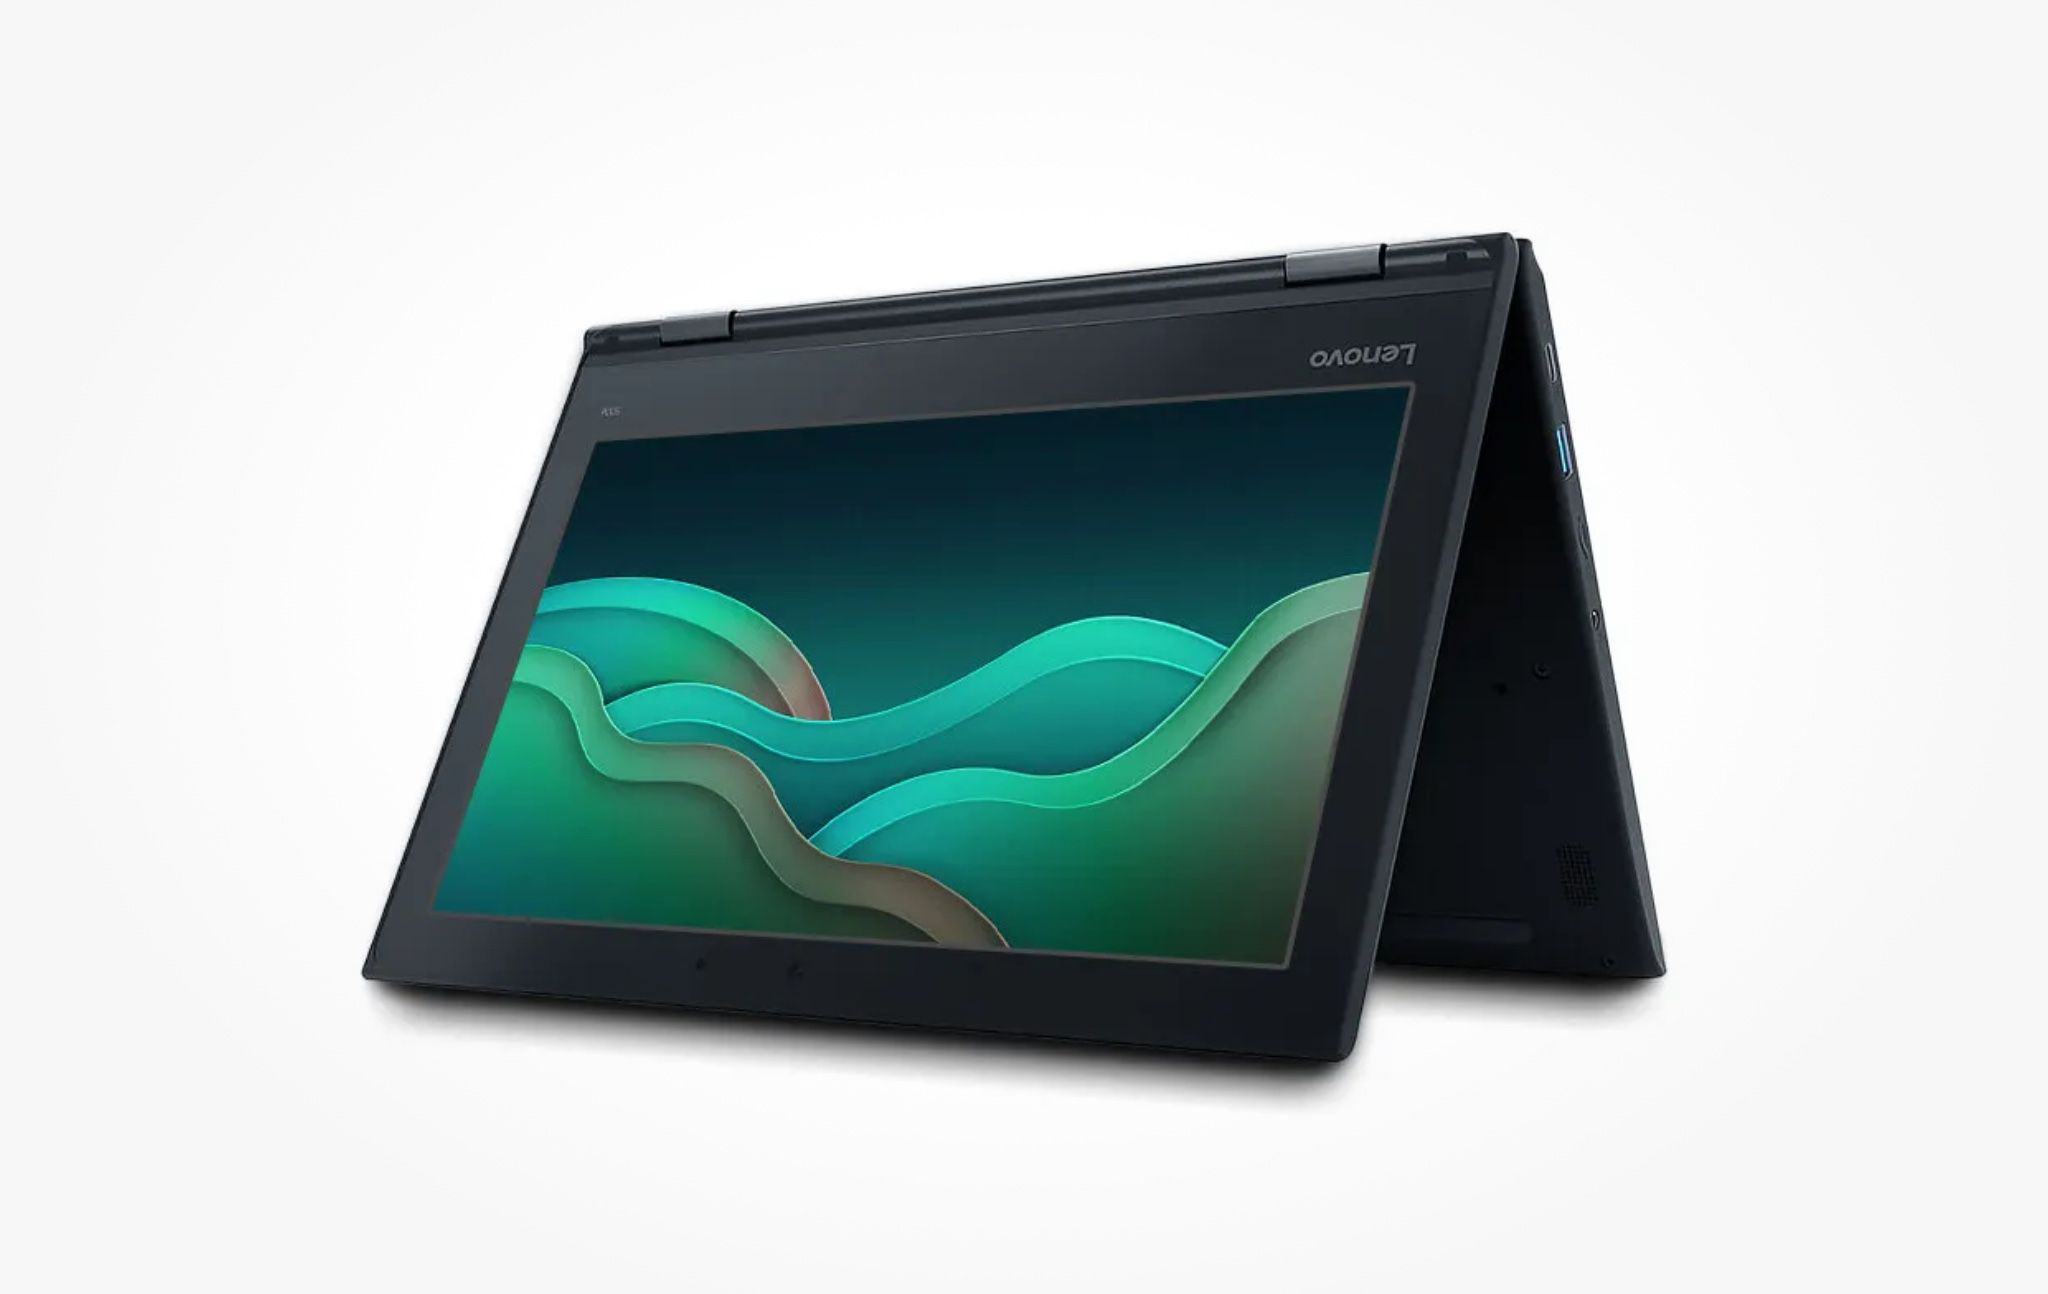 Lenovo 500e G3 - Touchscreen Display - Chromebook OS - 2 In 1 Laptop Tablet